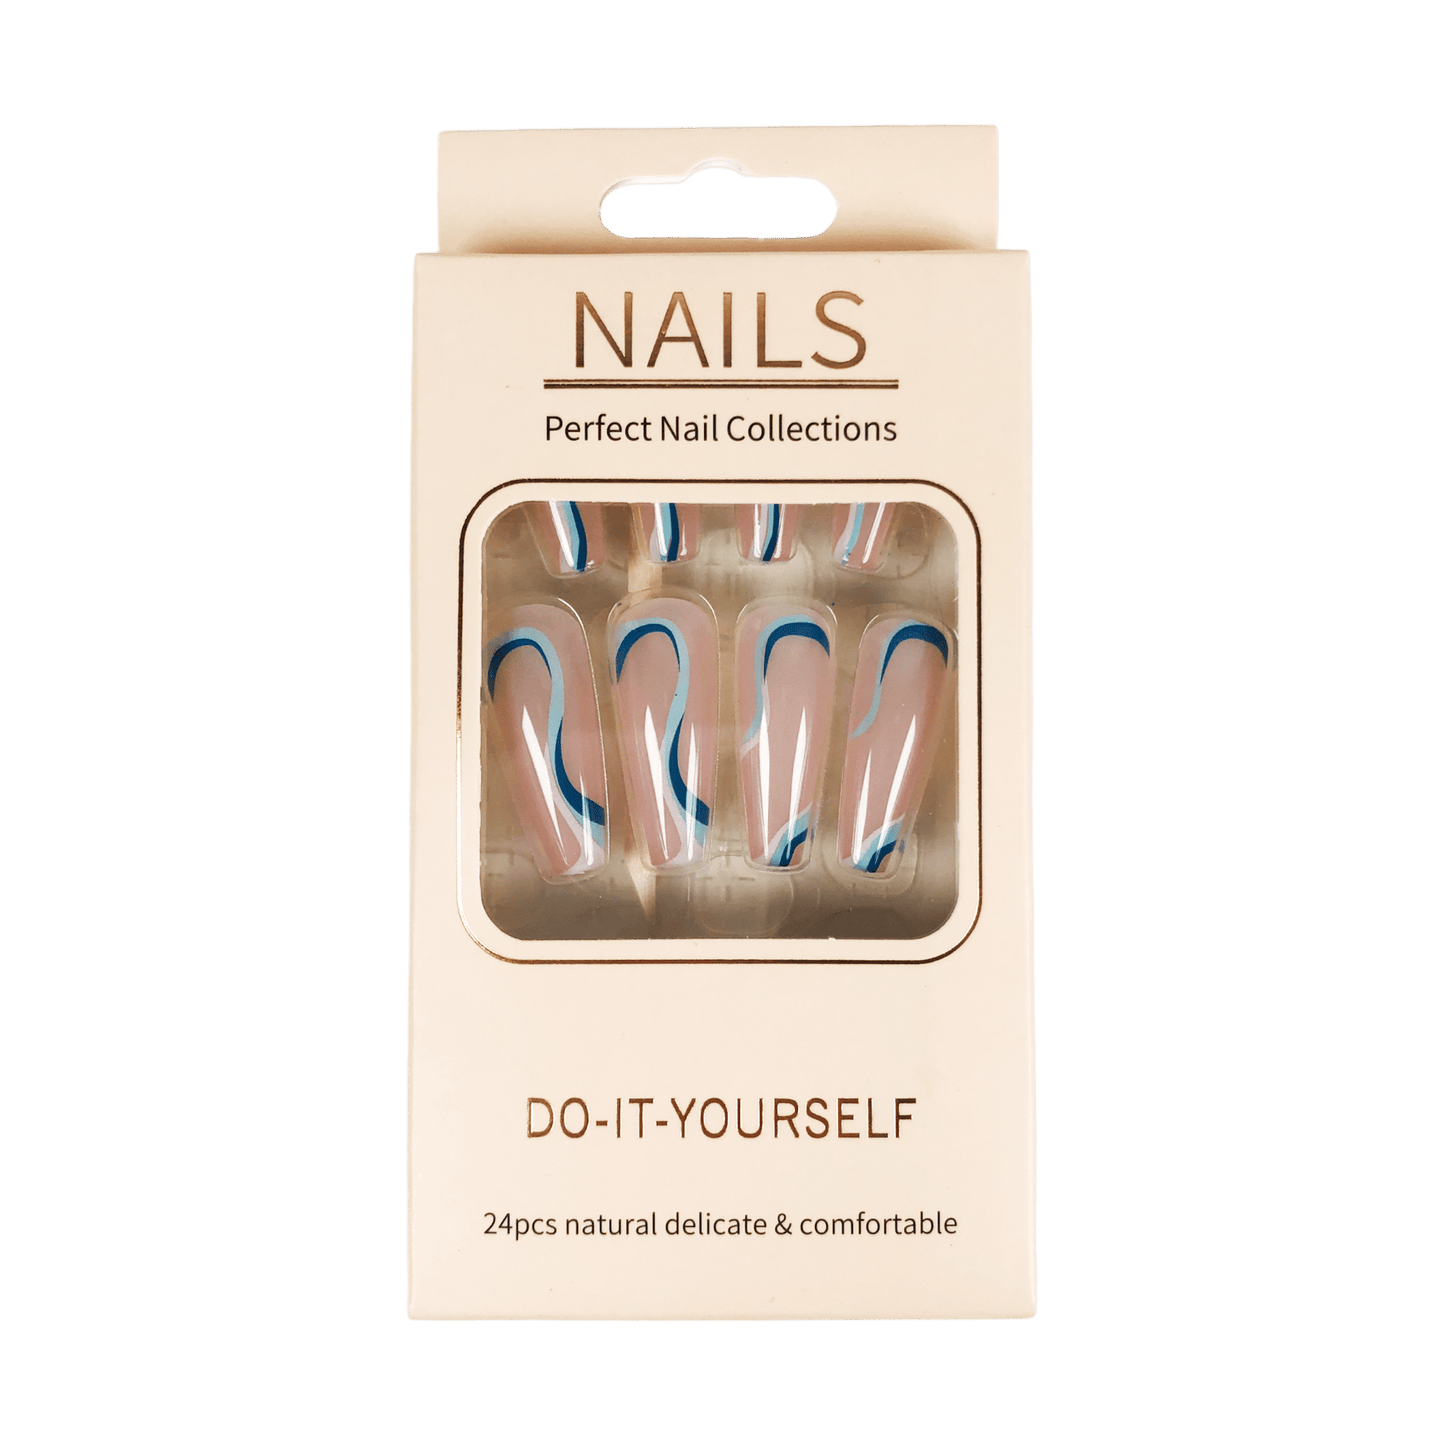 Euphoria nails